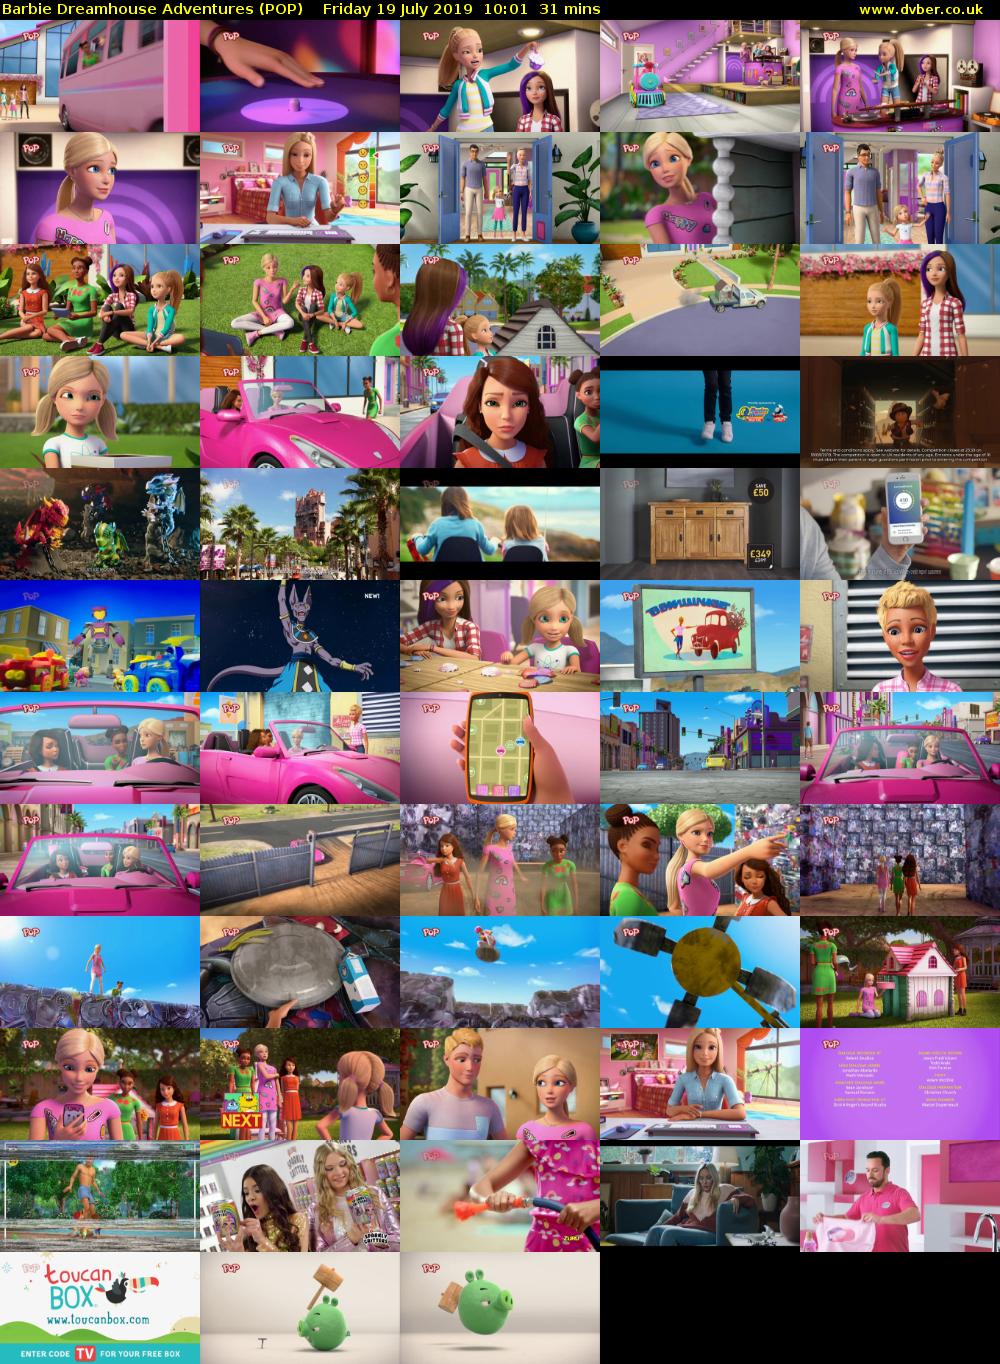 Barbie Dreamhouse Adventures (POP) Friday 19 July 2019 10:01 - 10:32